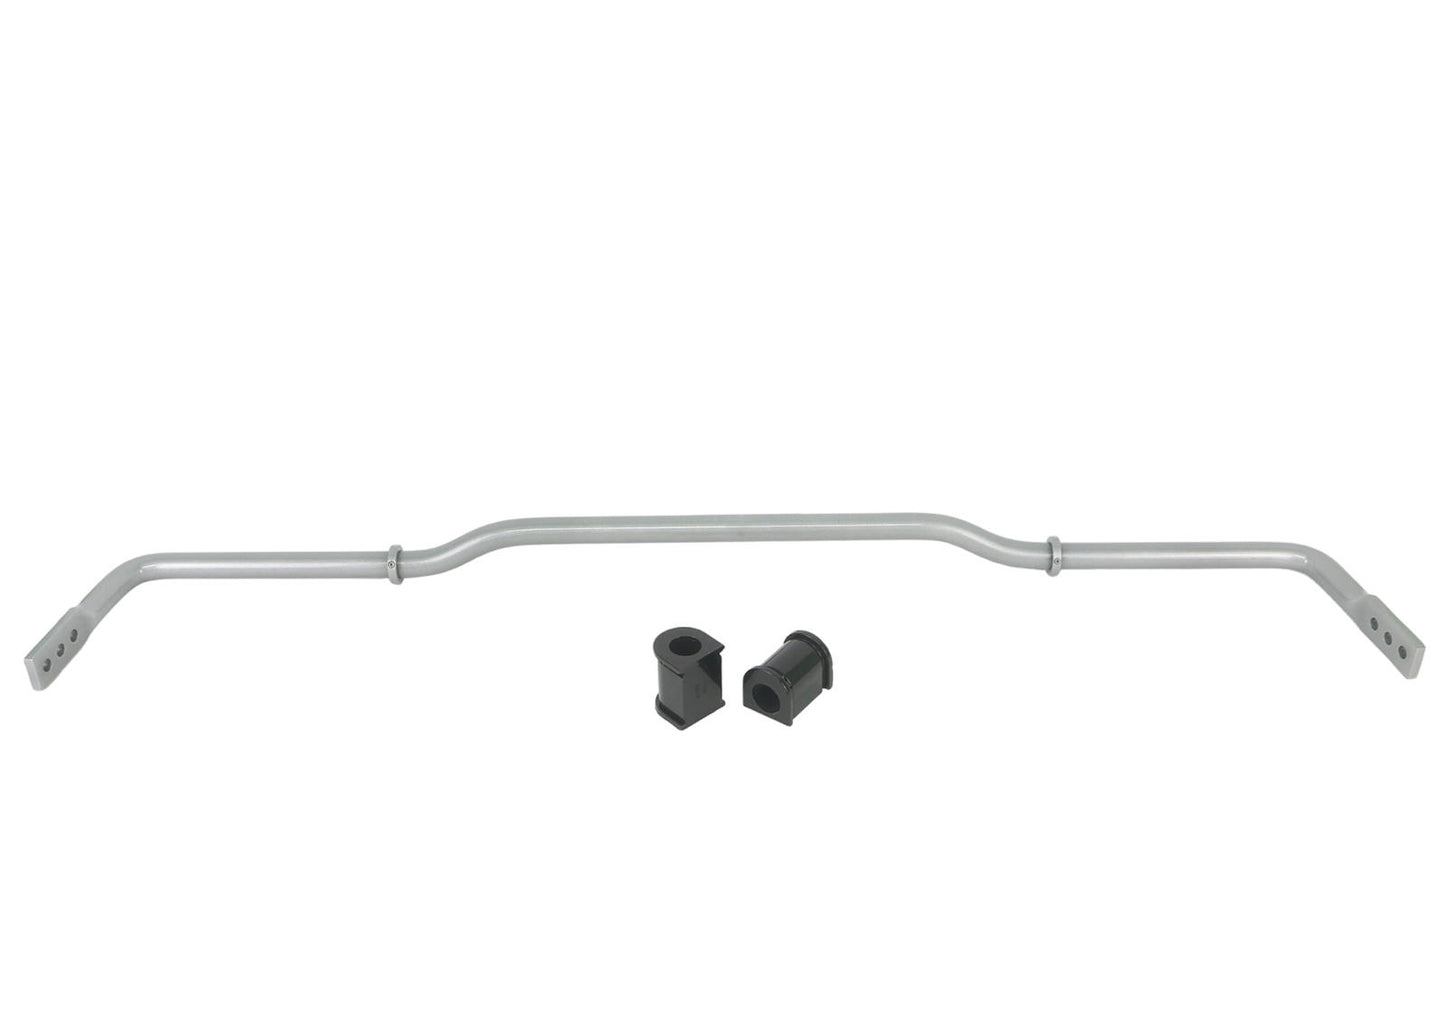 Sway bar - 24mm 3 point adjustable